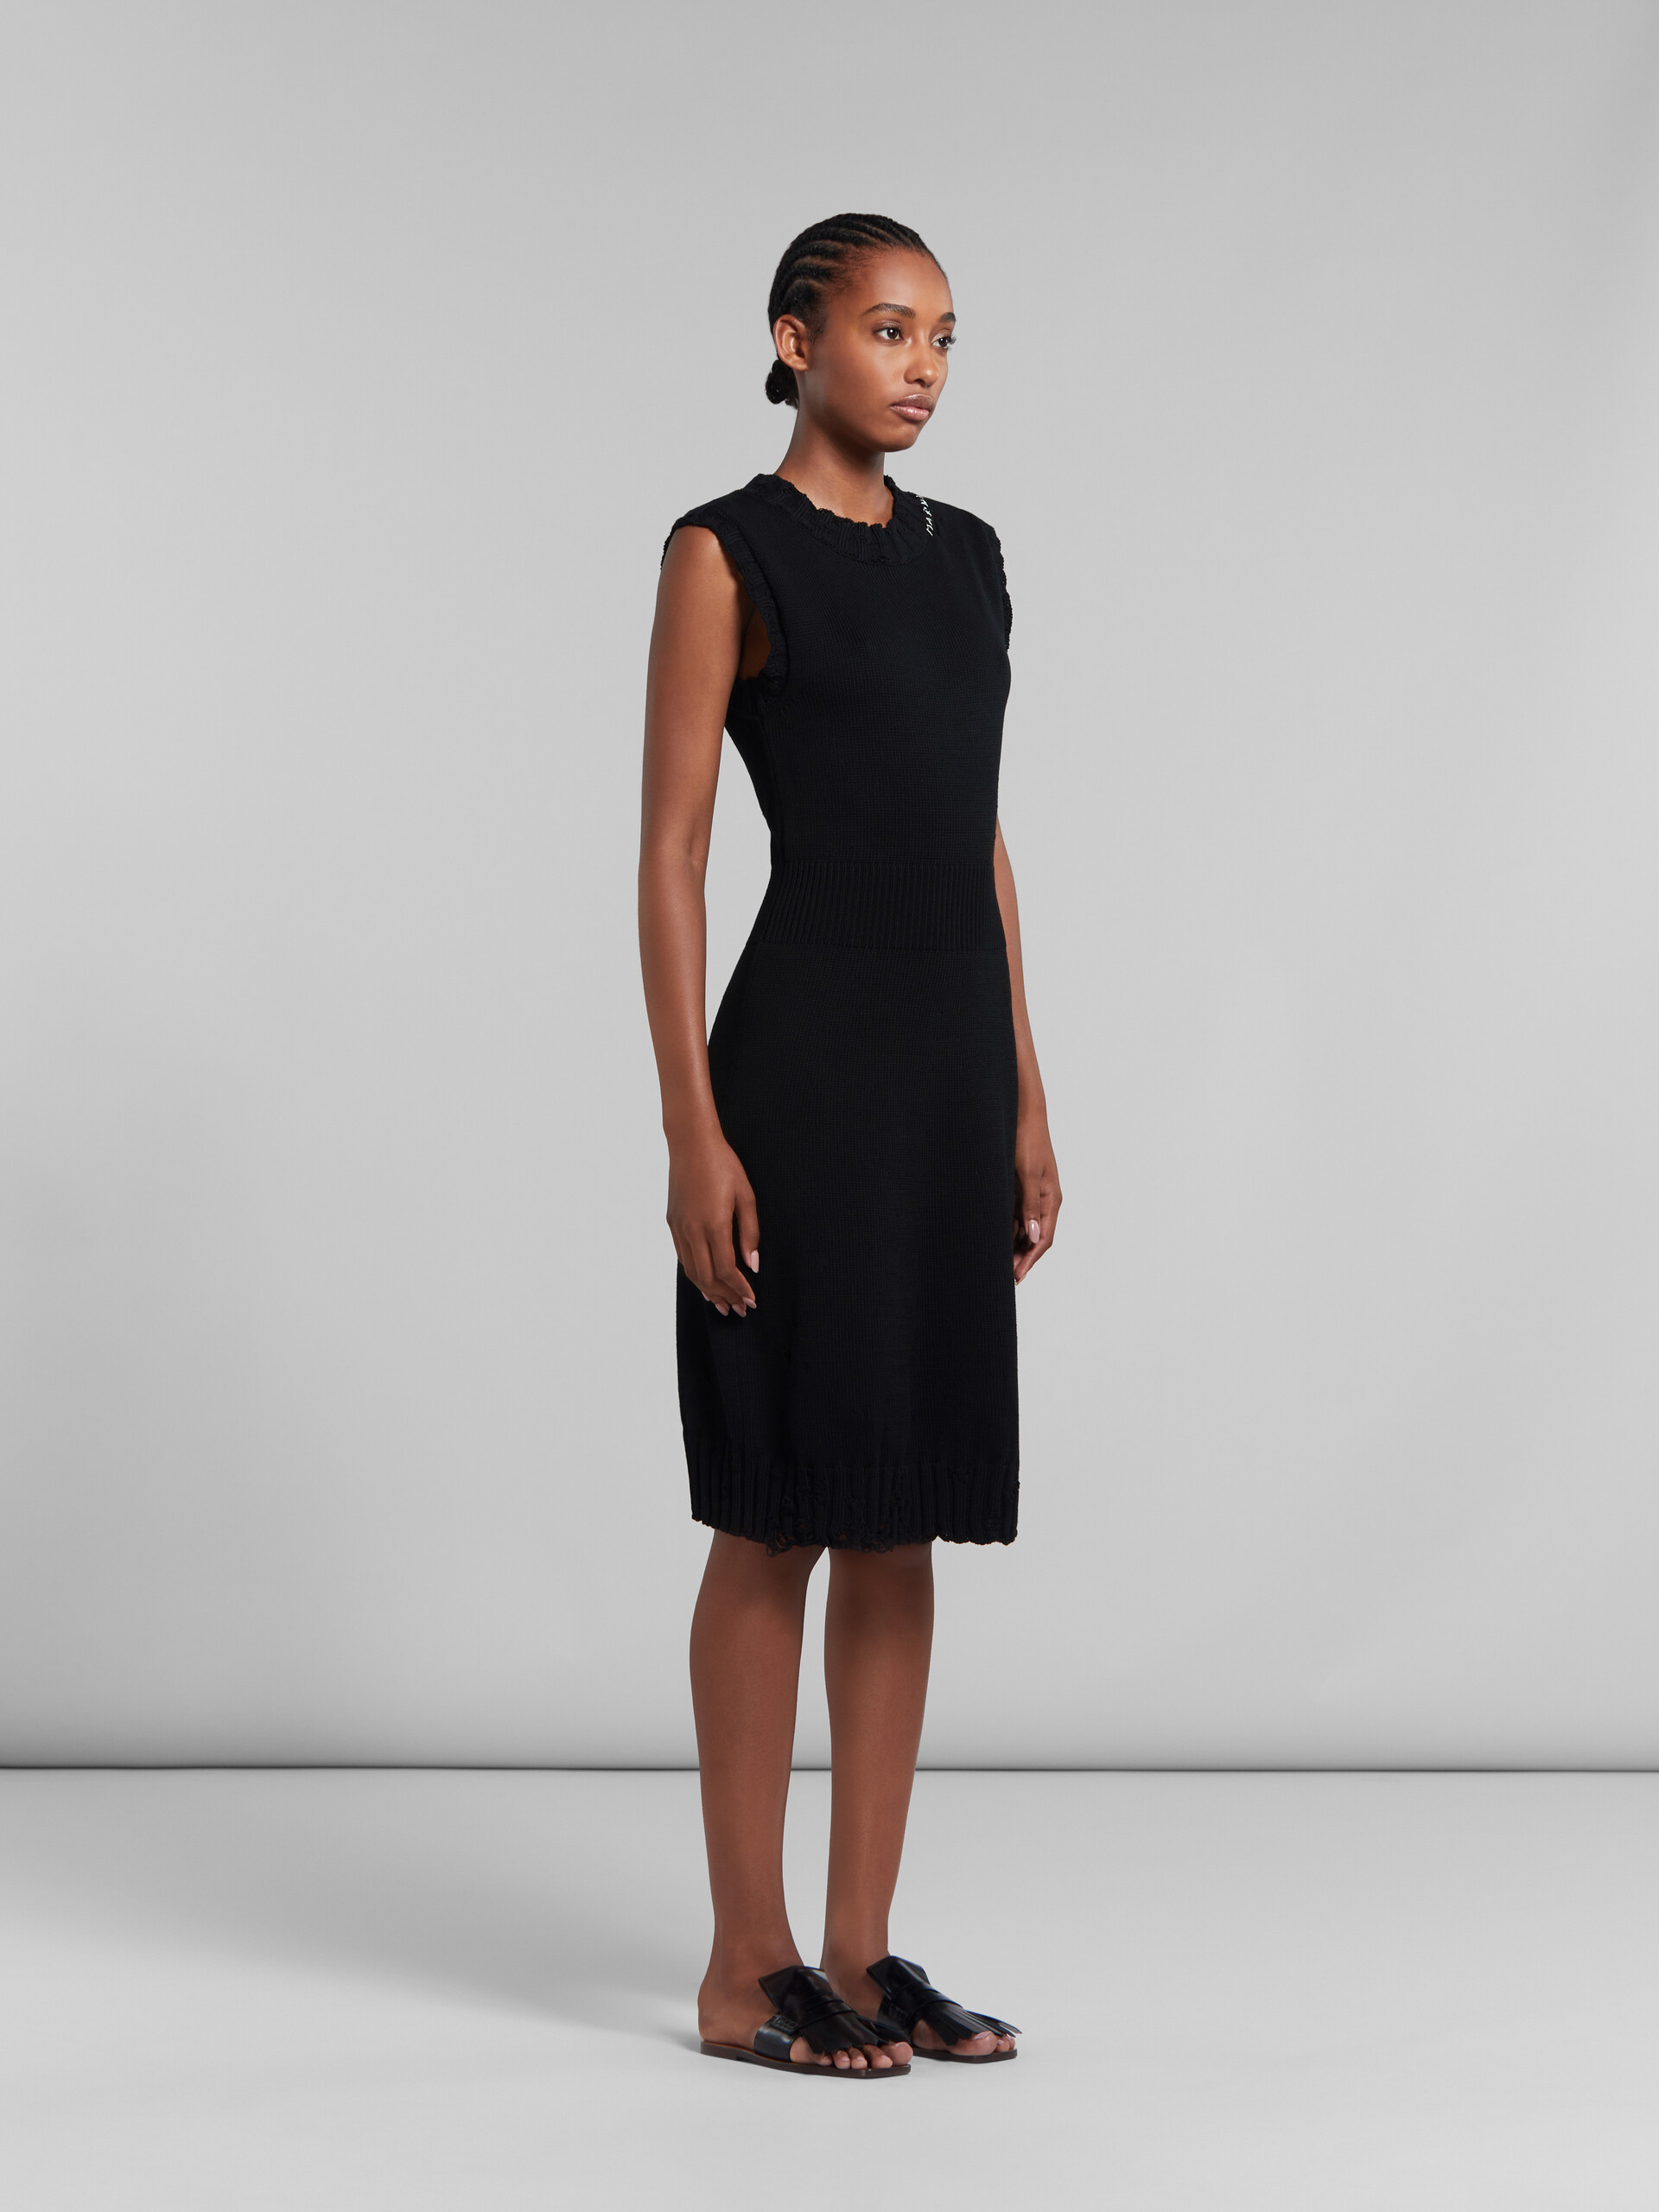 Black dishevelled cotton knitted dress - Dresses - Image 6